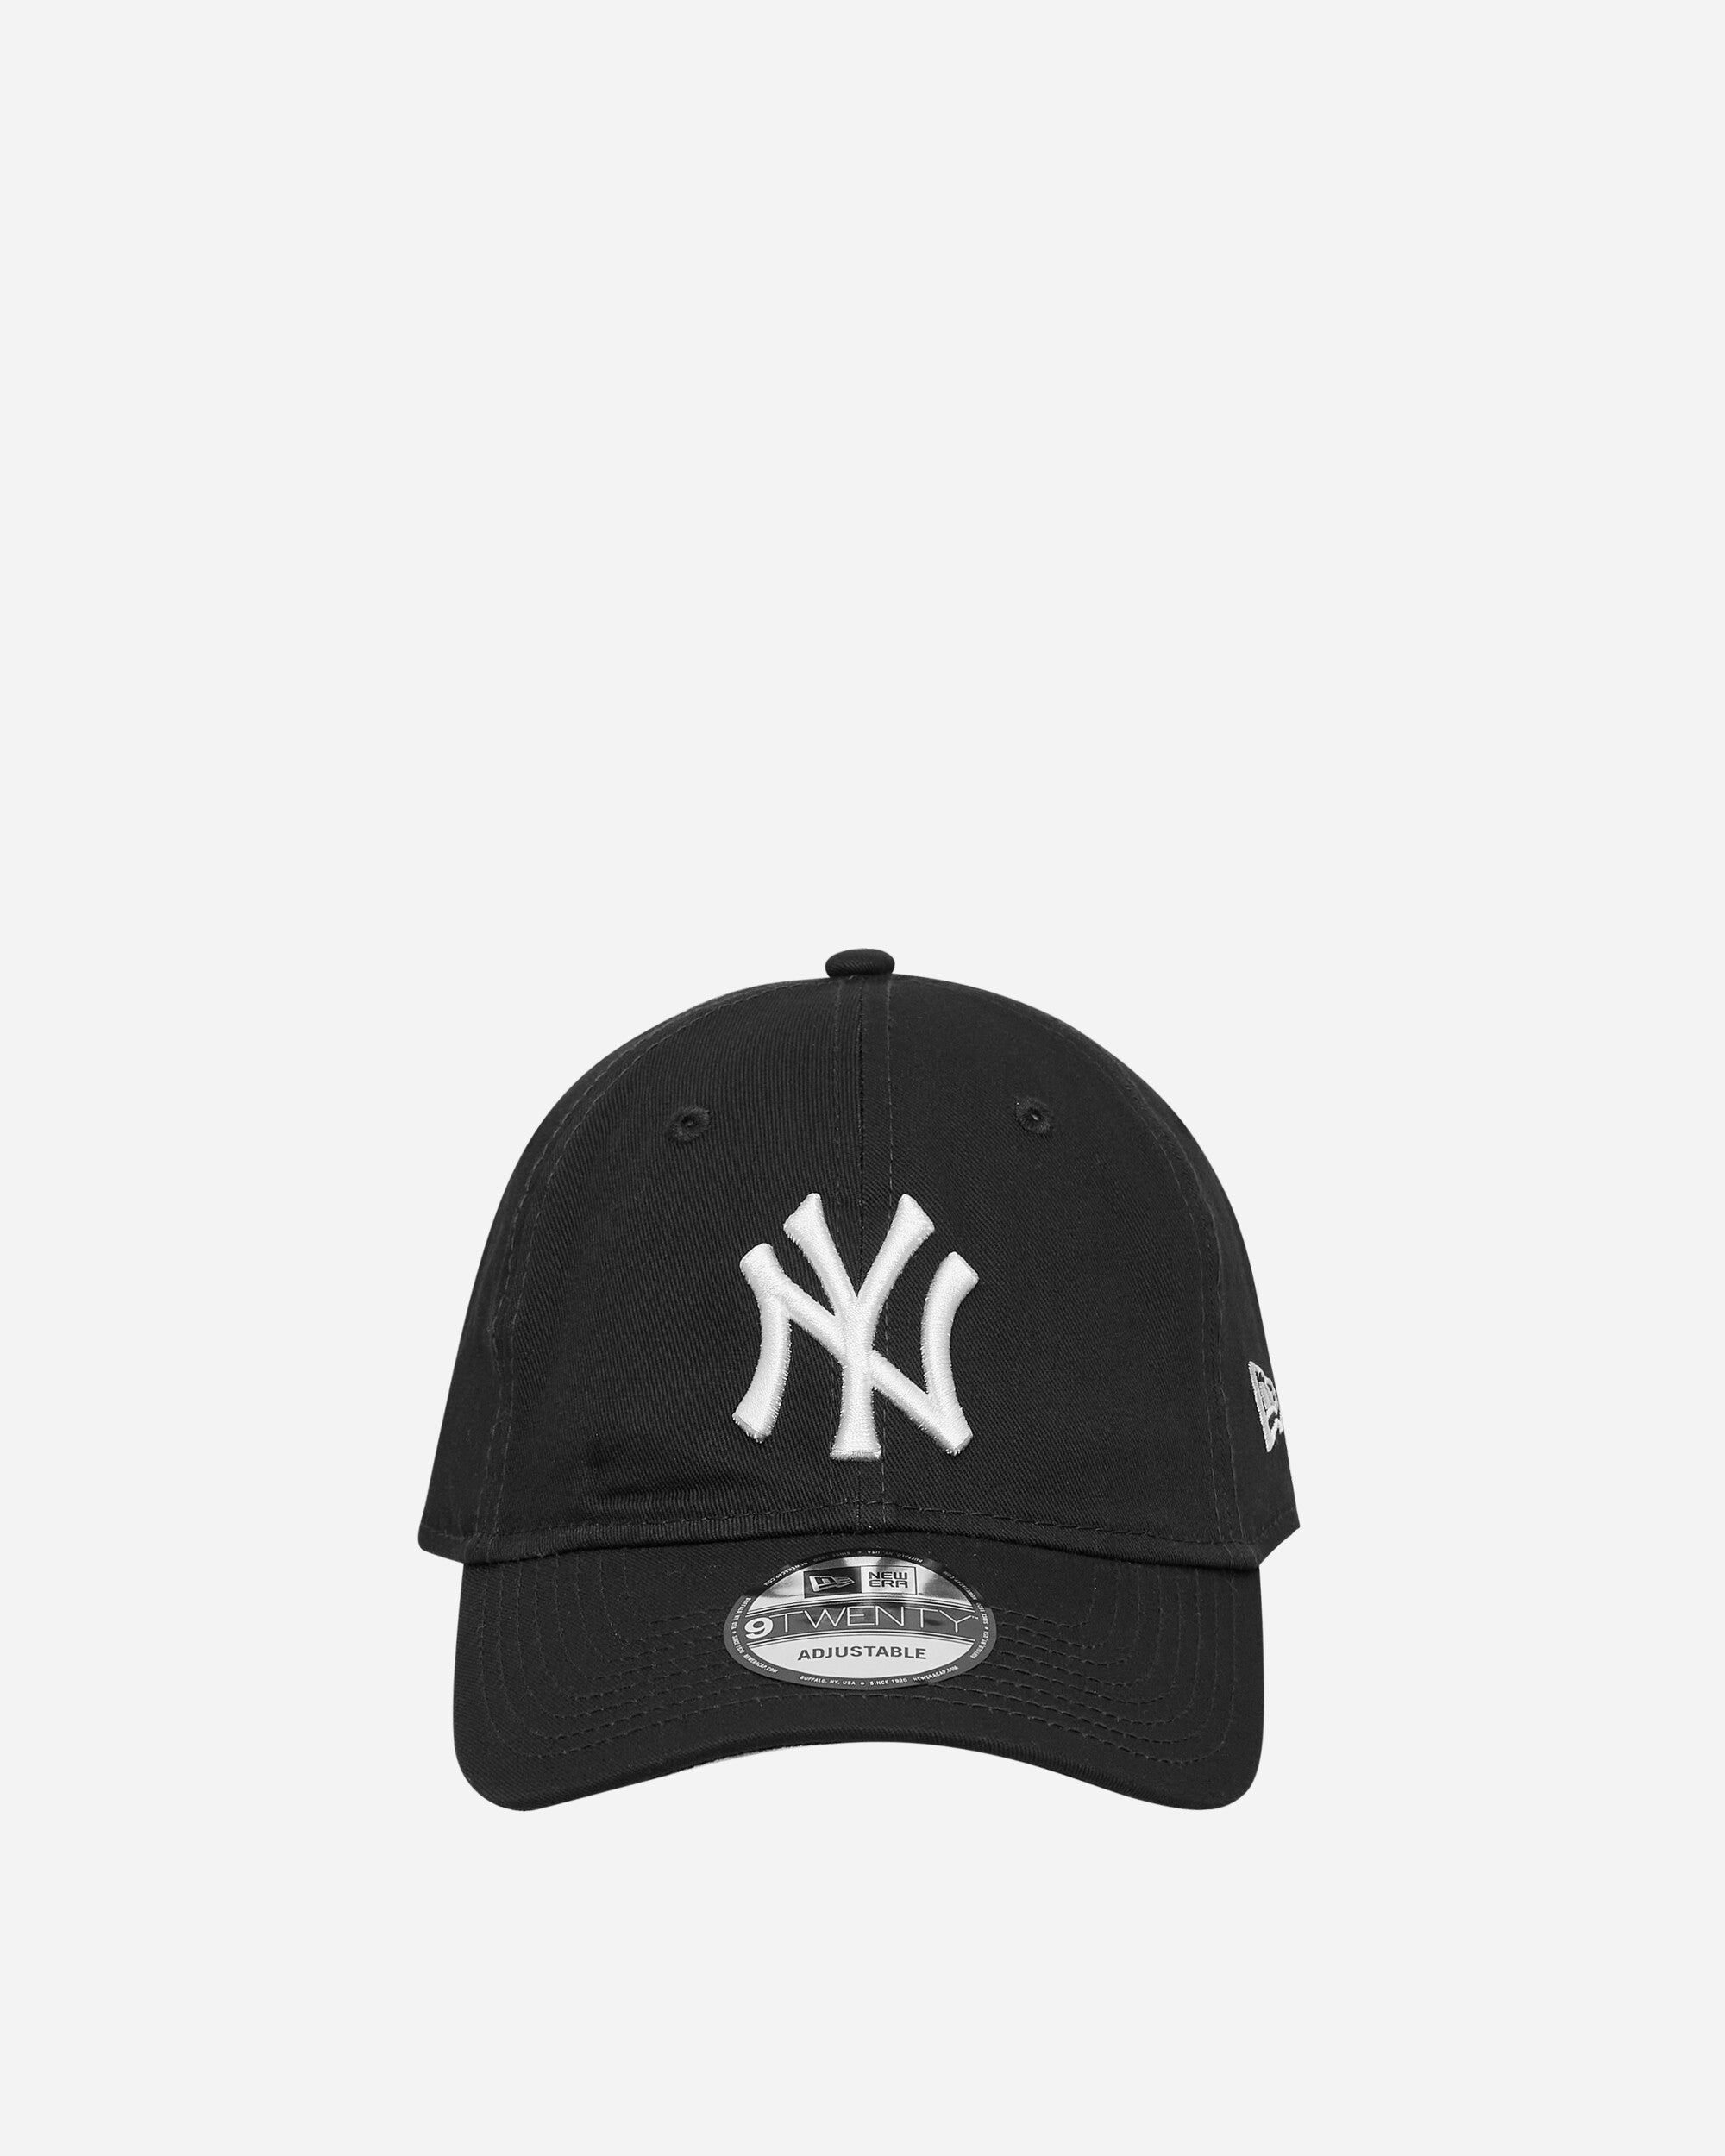 New York Yankees 9TWENTY Cap Black